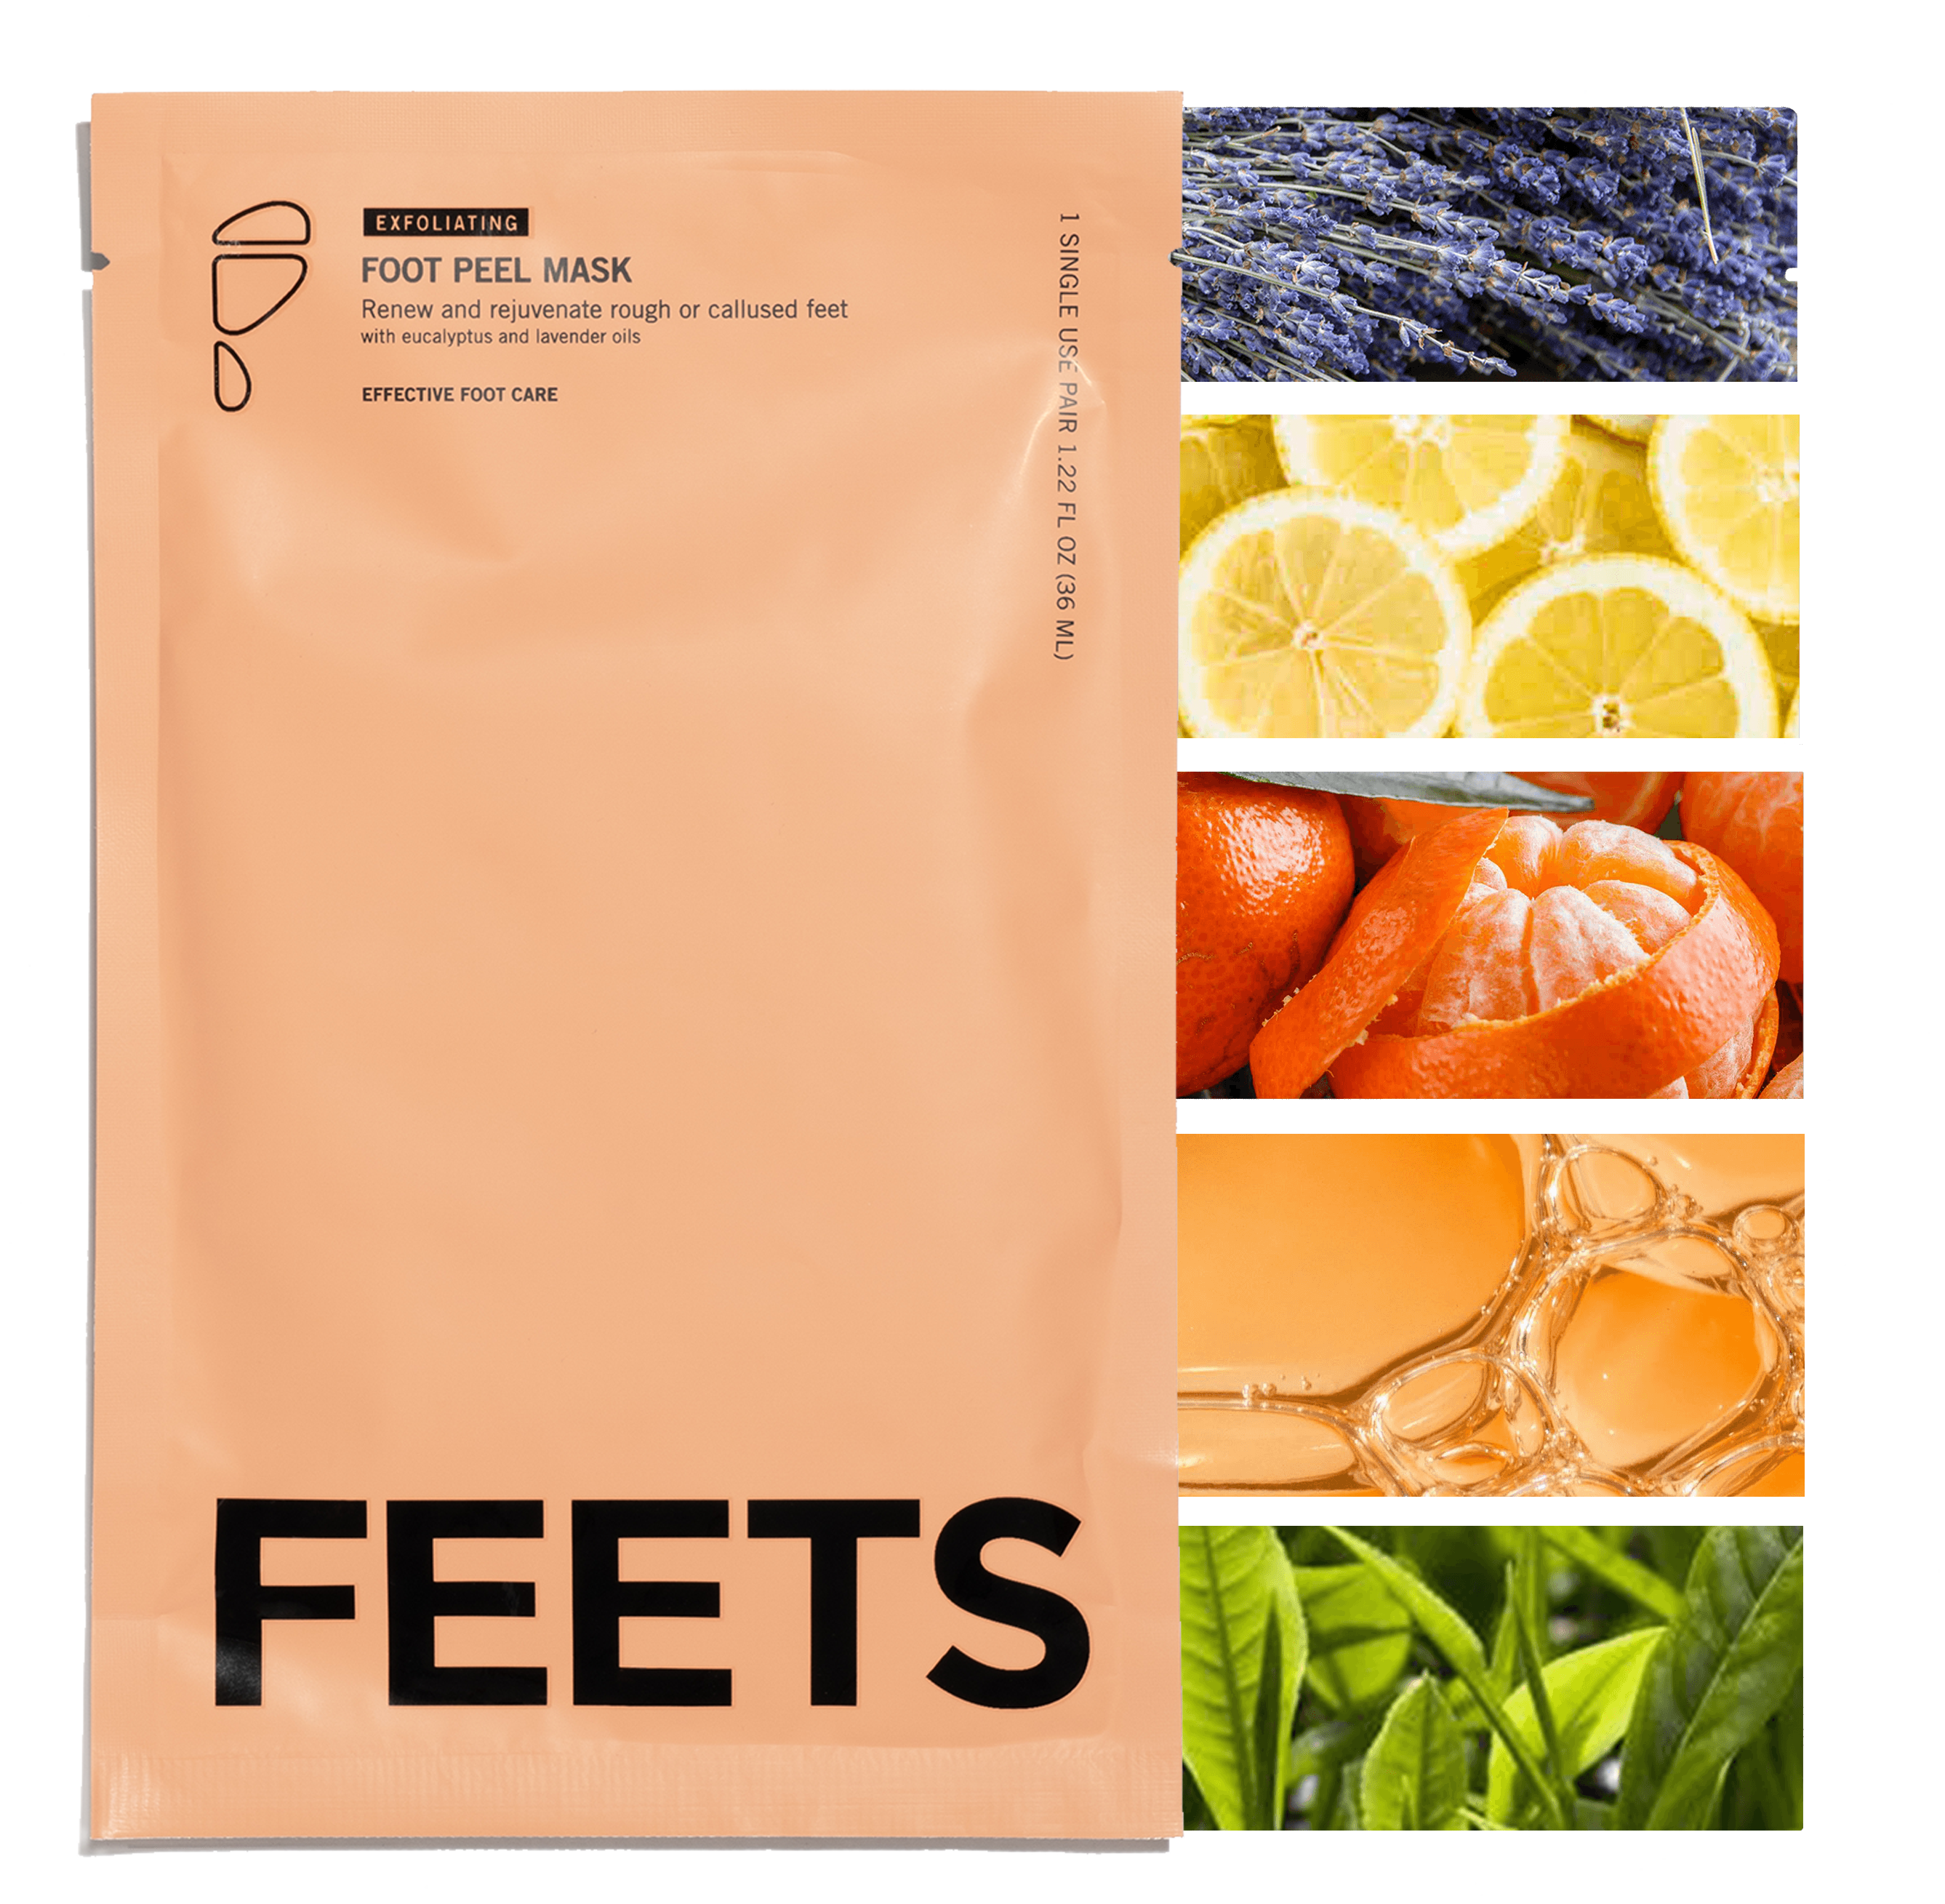 Baby Foot - Original Foot Peel Deep Exfoliation - Fresh Lavender